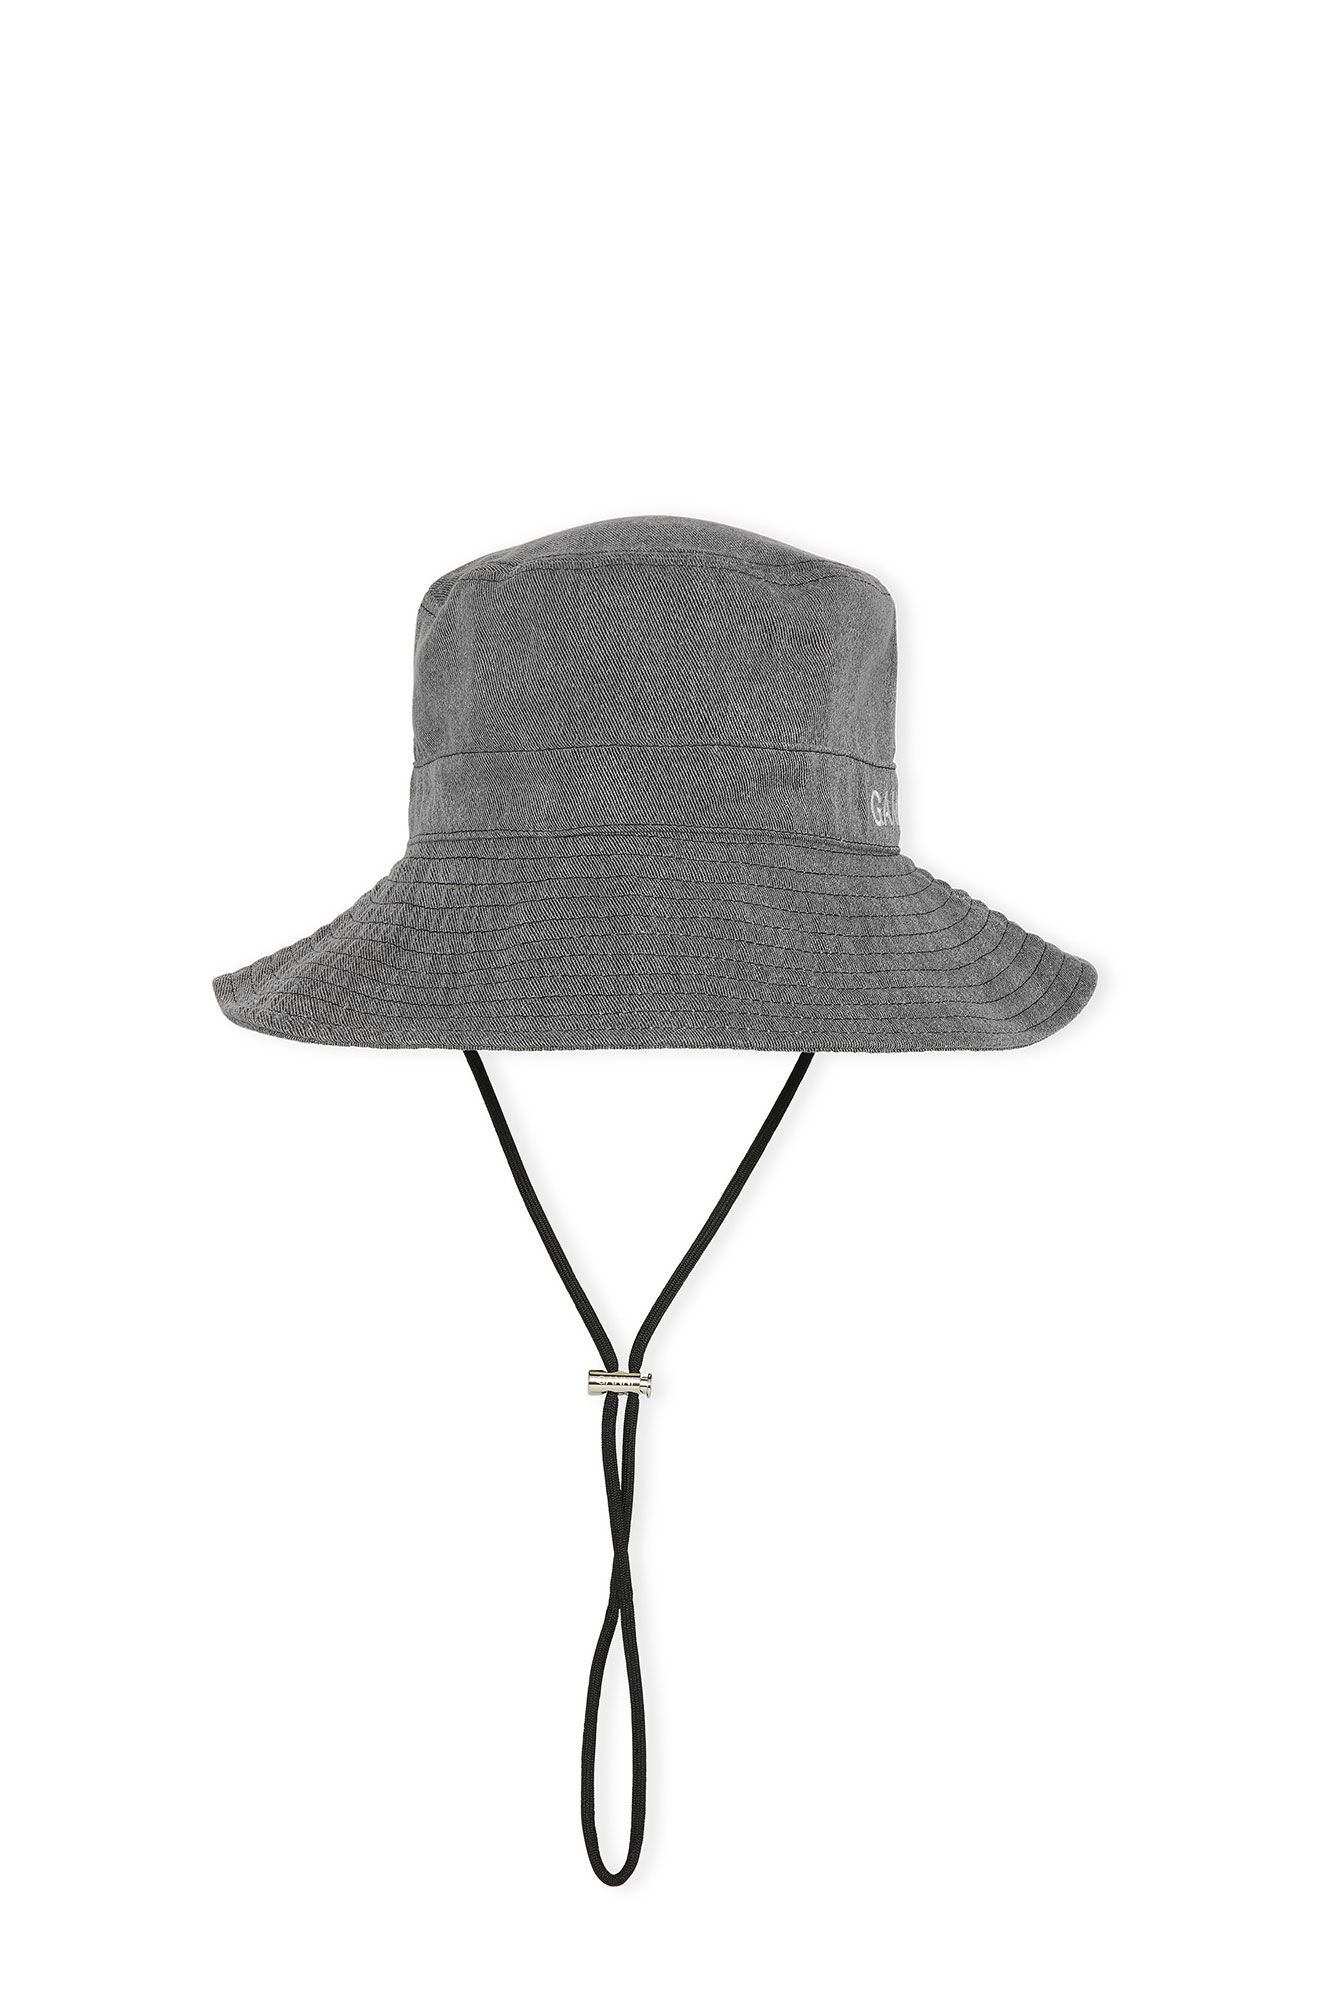 BLACK BUCKET HAT - 1